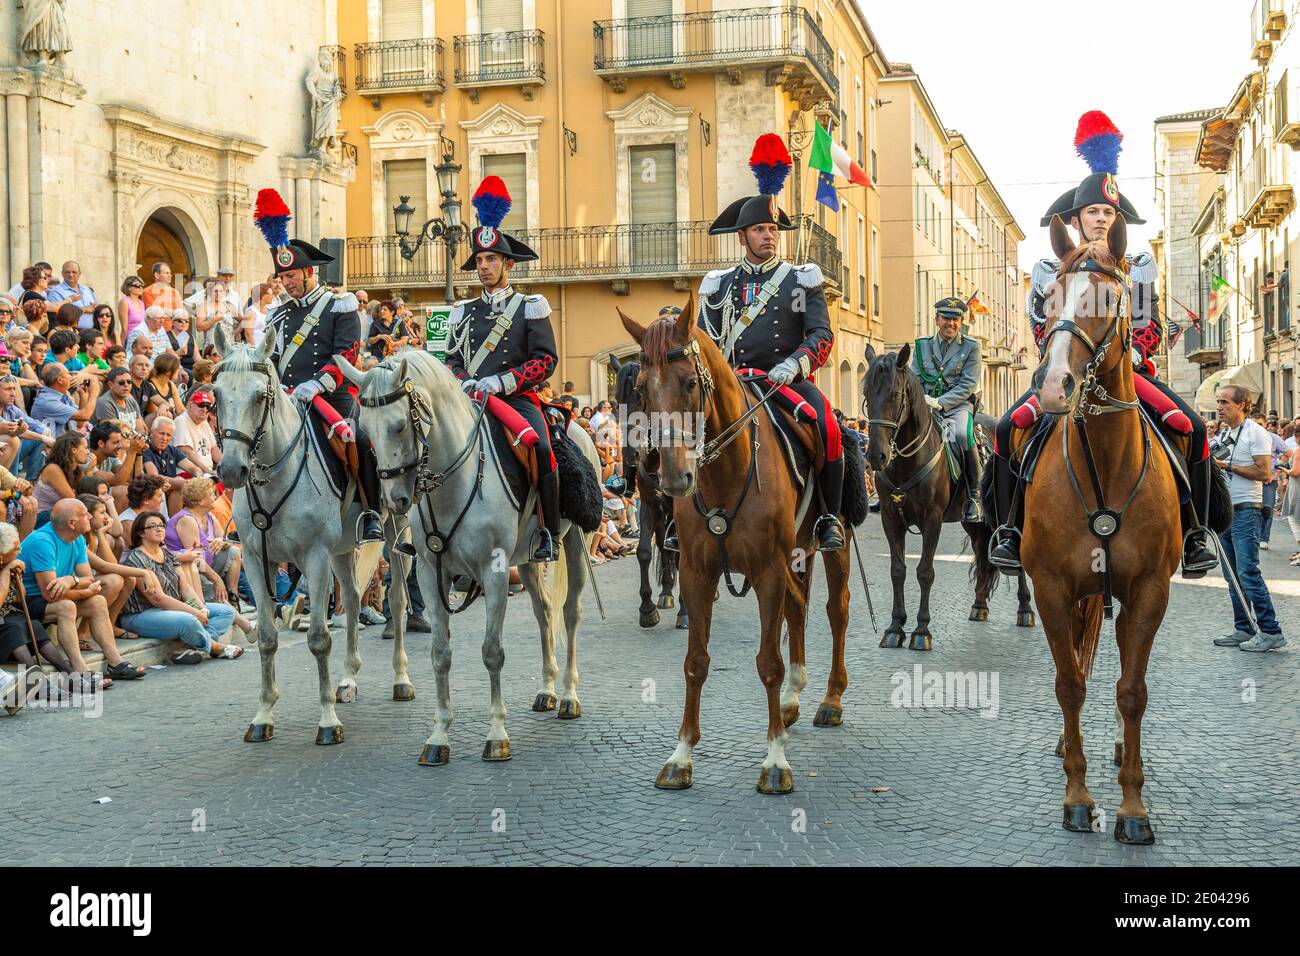 Carabinieri on horseback, guests of the Giostra Cavalleresca di Sulmona, parade through the streets of the city. Sulmona, Abruzzo, Italy, Europe Stock Photo